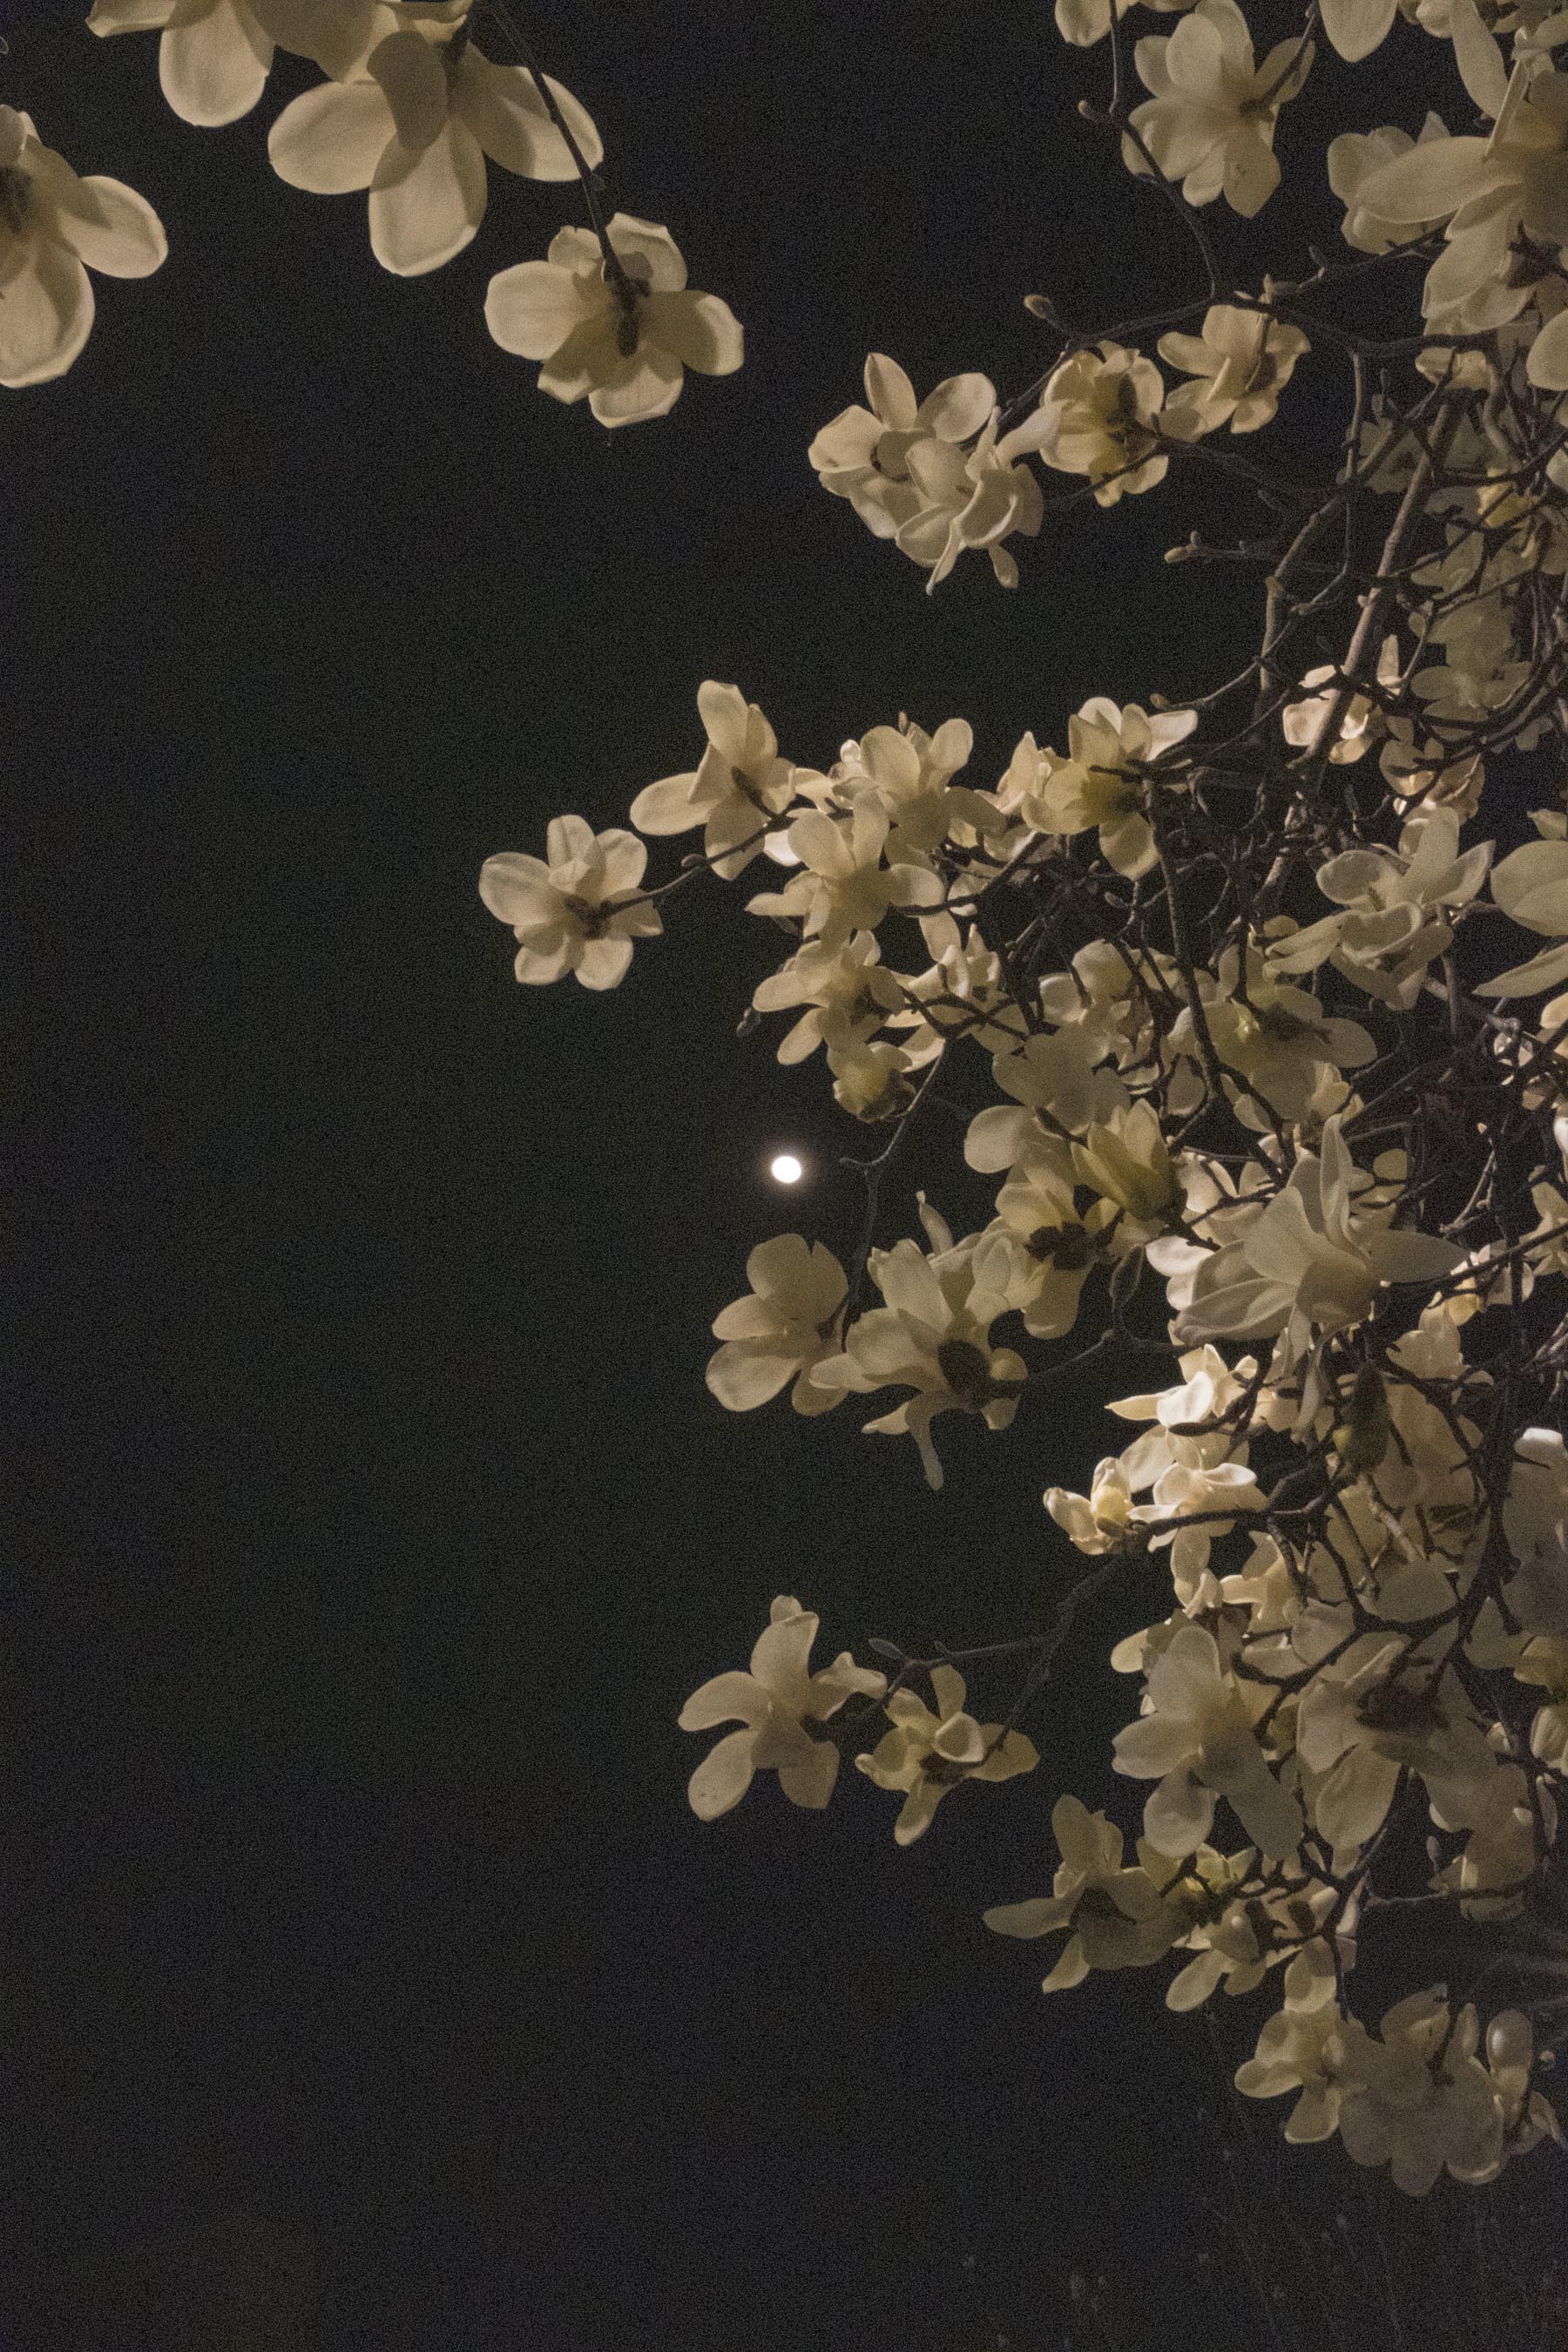 Magnolia and Moon